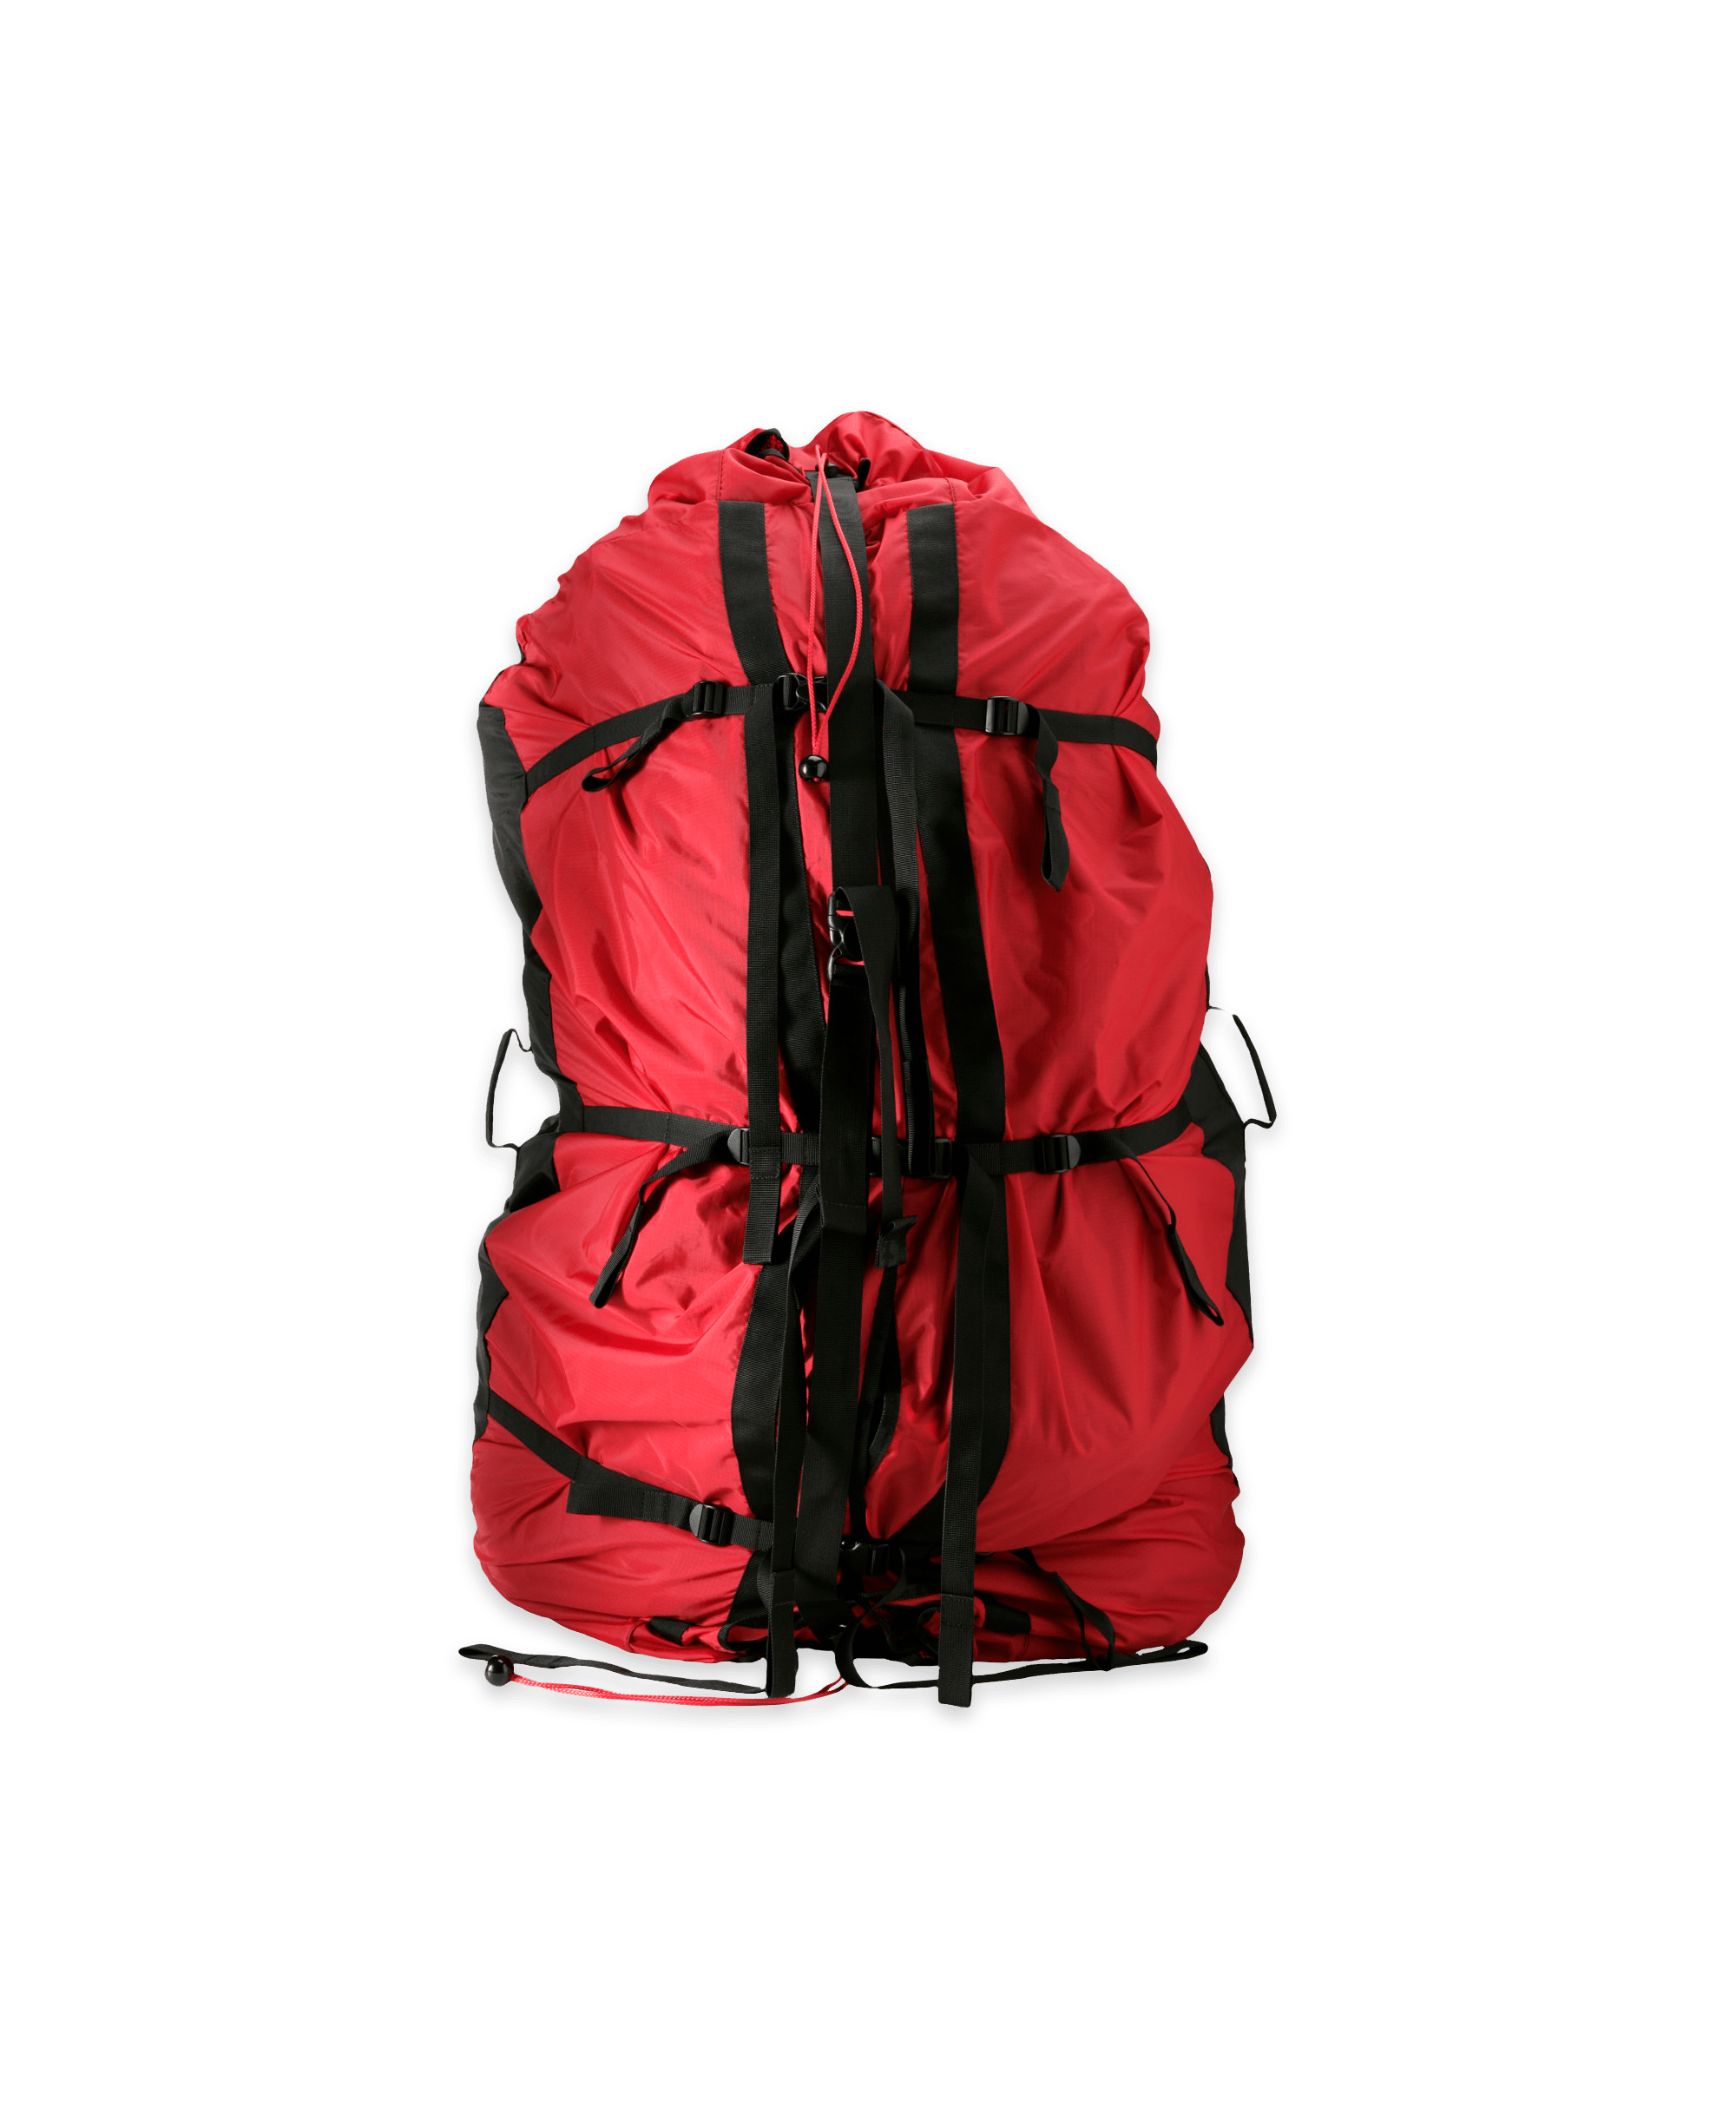 Easy Bag (Stuff Bag) | Ozone Paragliders